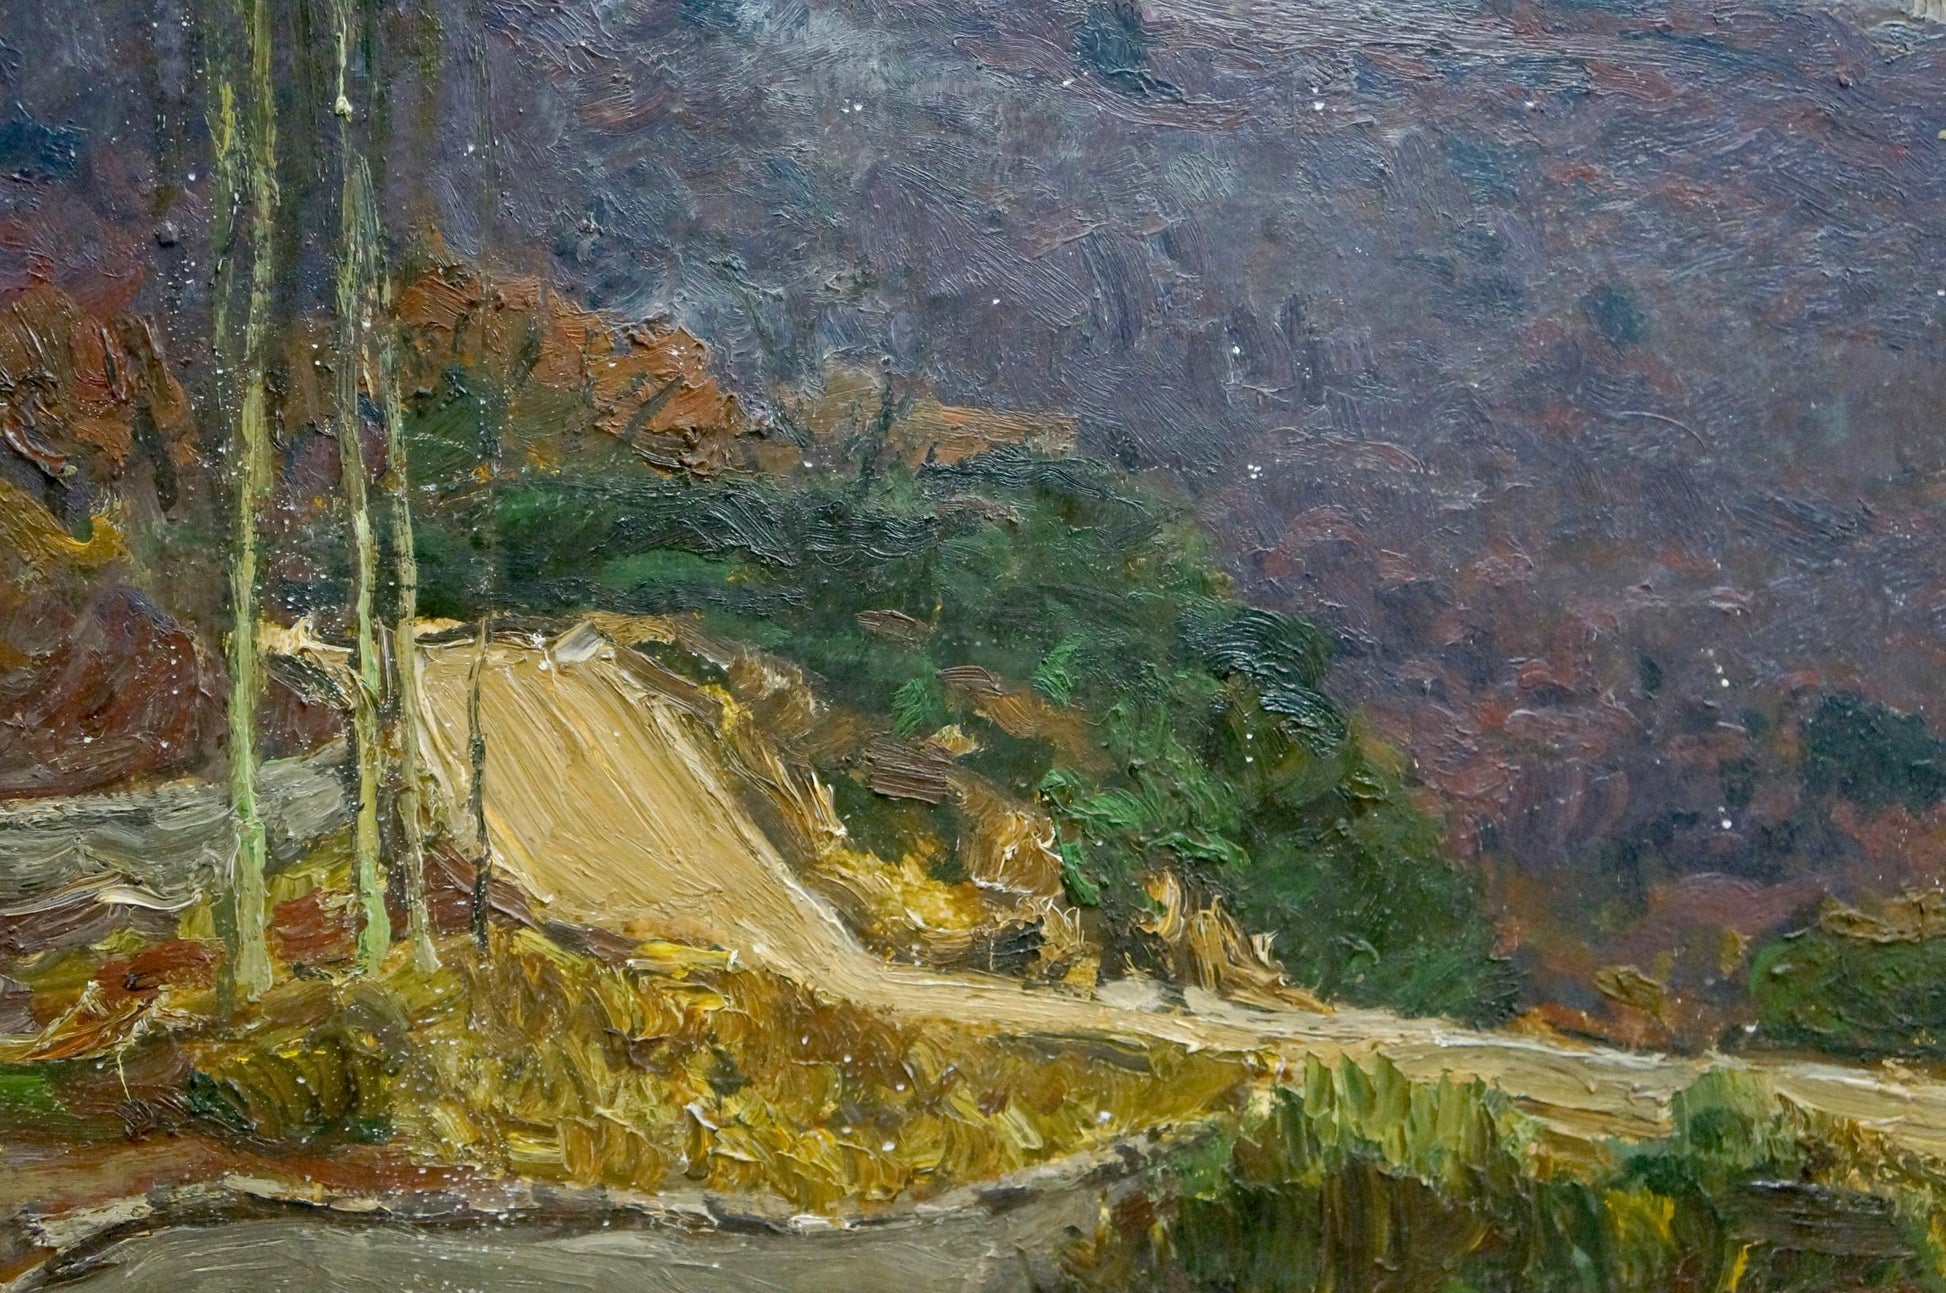 Oil artwork showcasing "Mountain Landscape" by Peter Kuzmich Stolyarenko